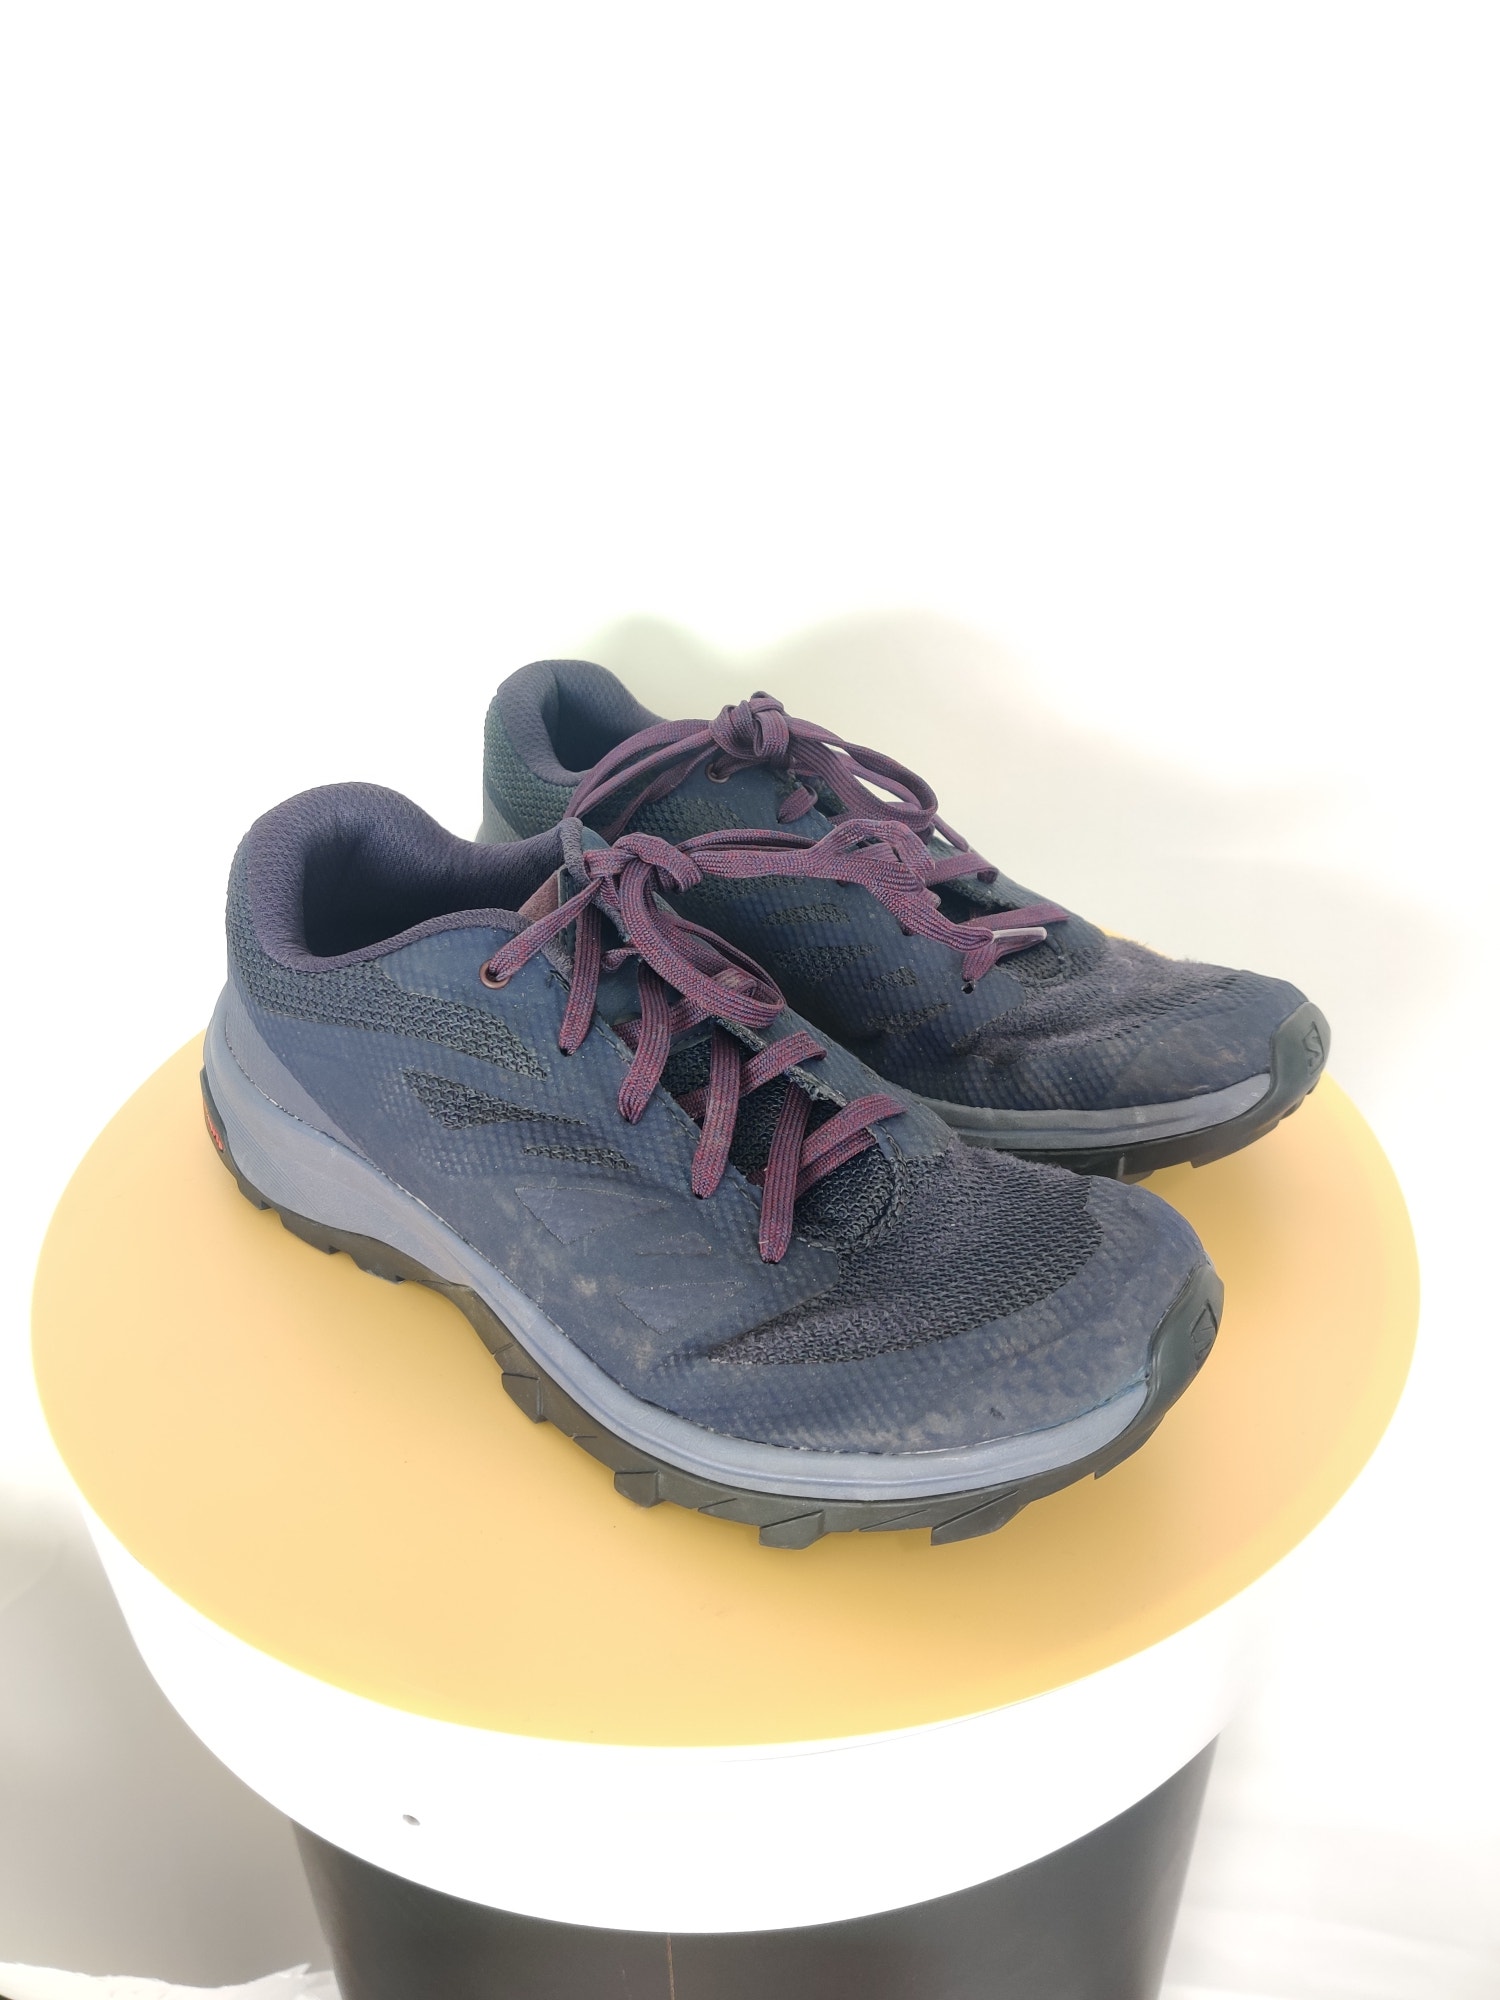 (V) Salomon Women shoes sandals hiking running sport purple contagrip sz 8 - Picture 1 of 12